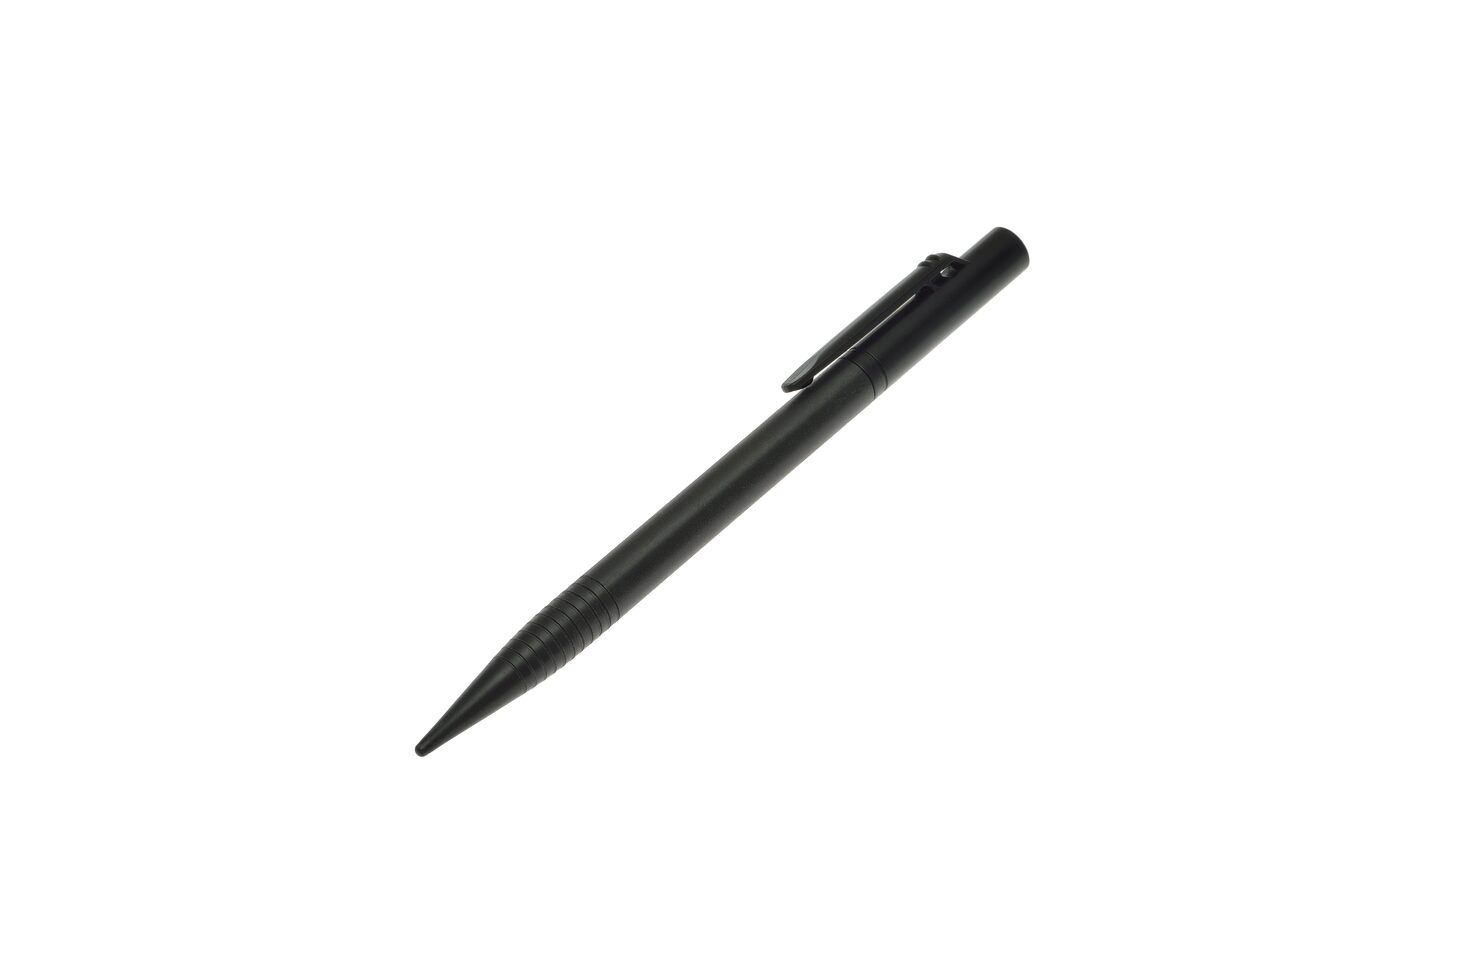 FZ-M1 Capacitive Stylus Pen